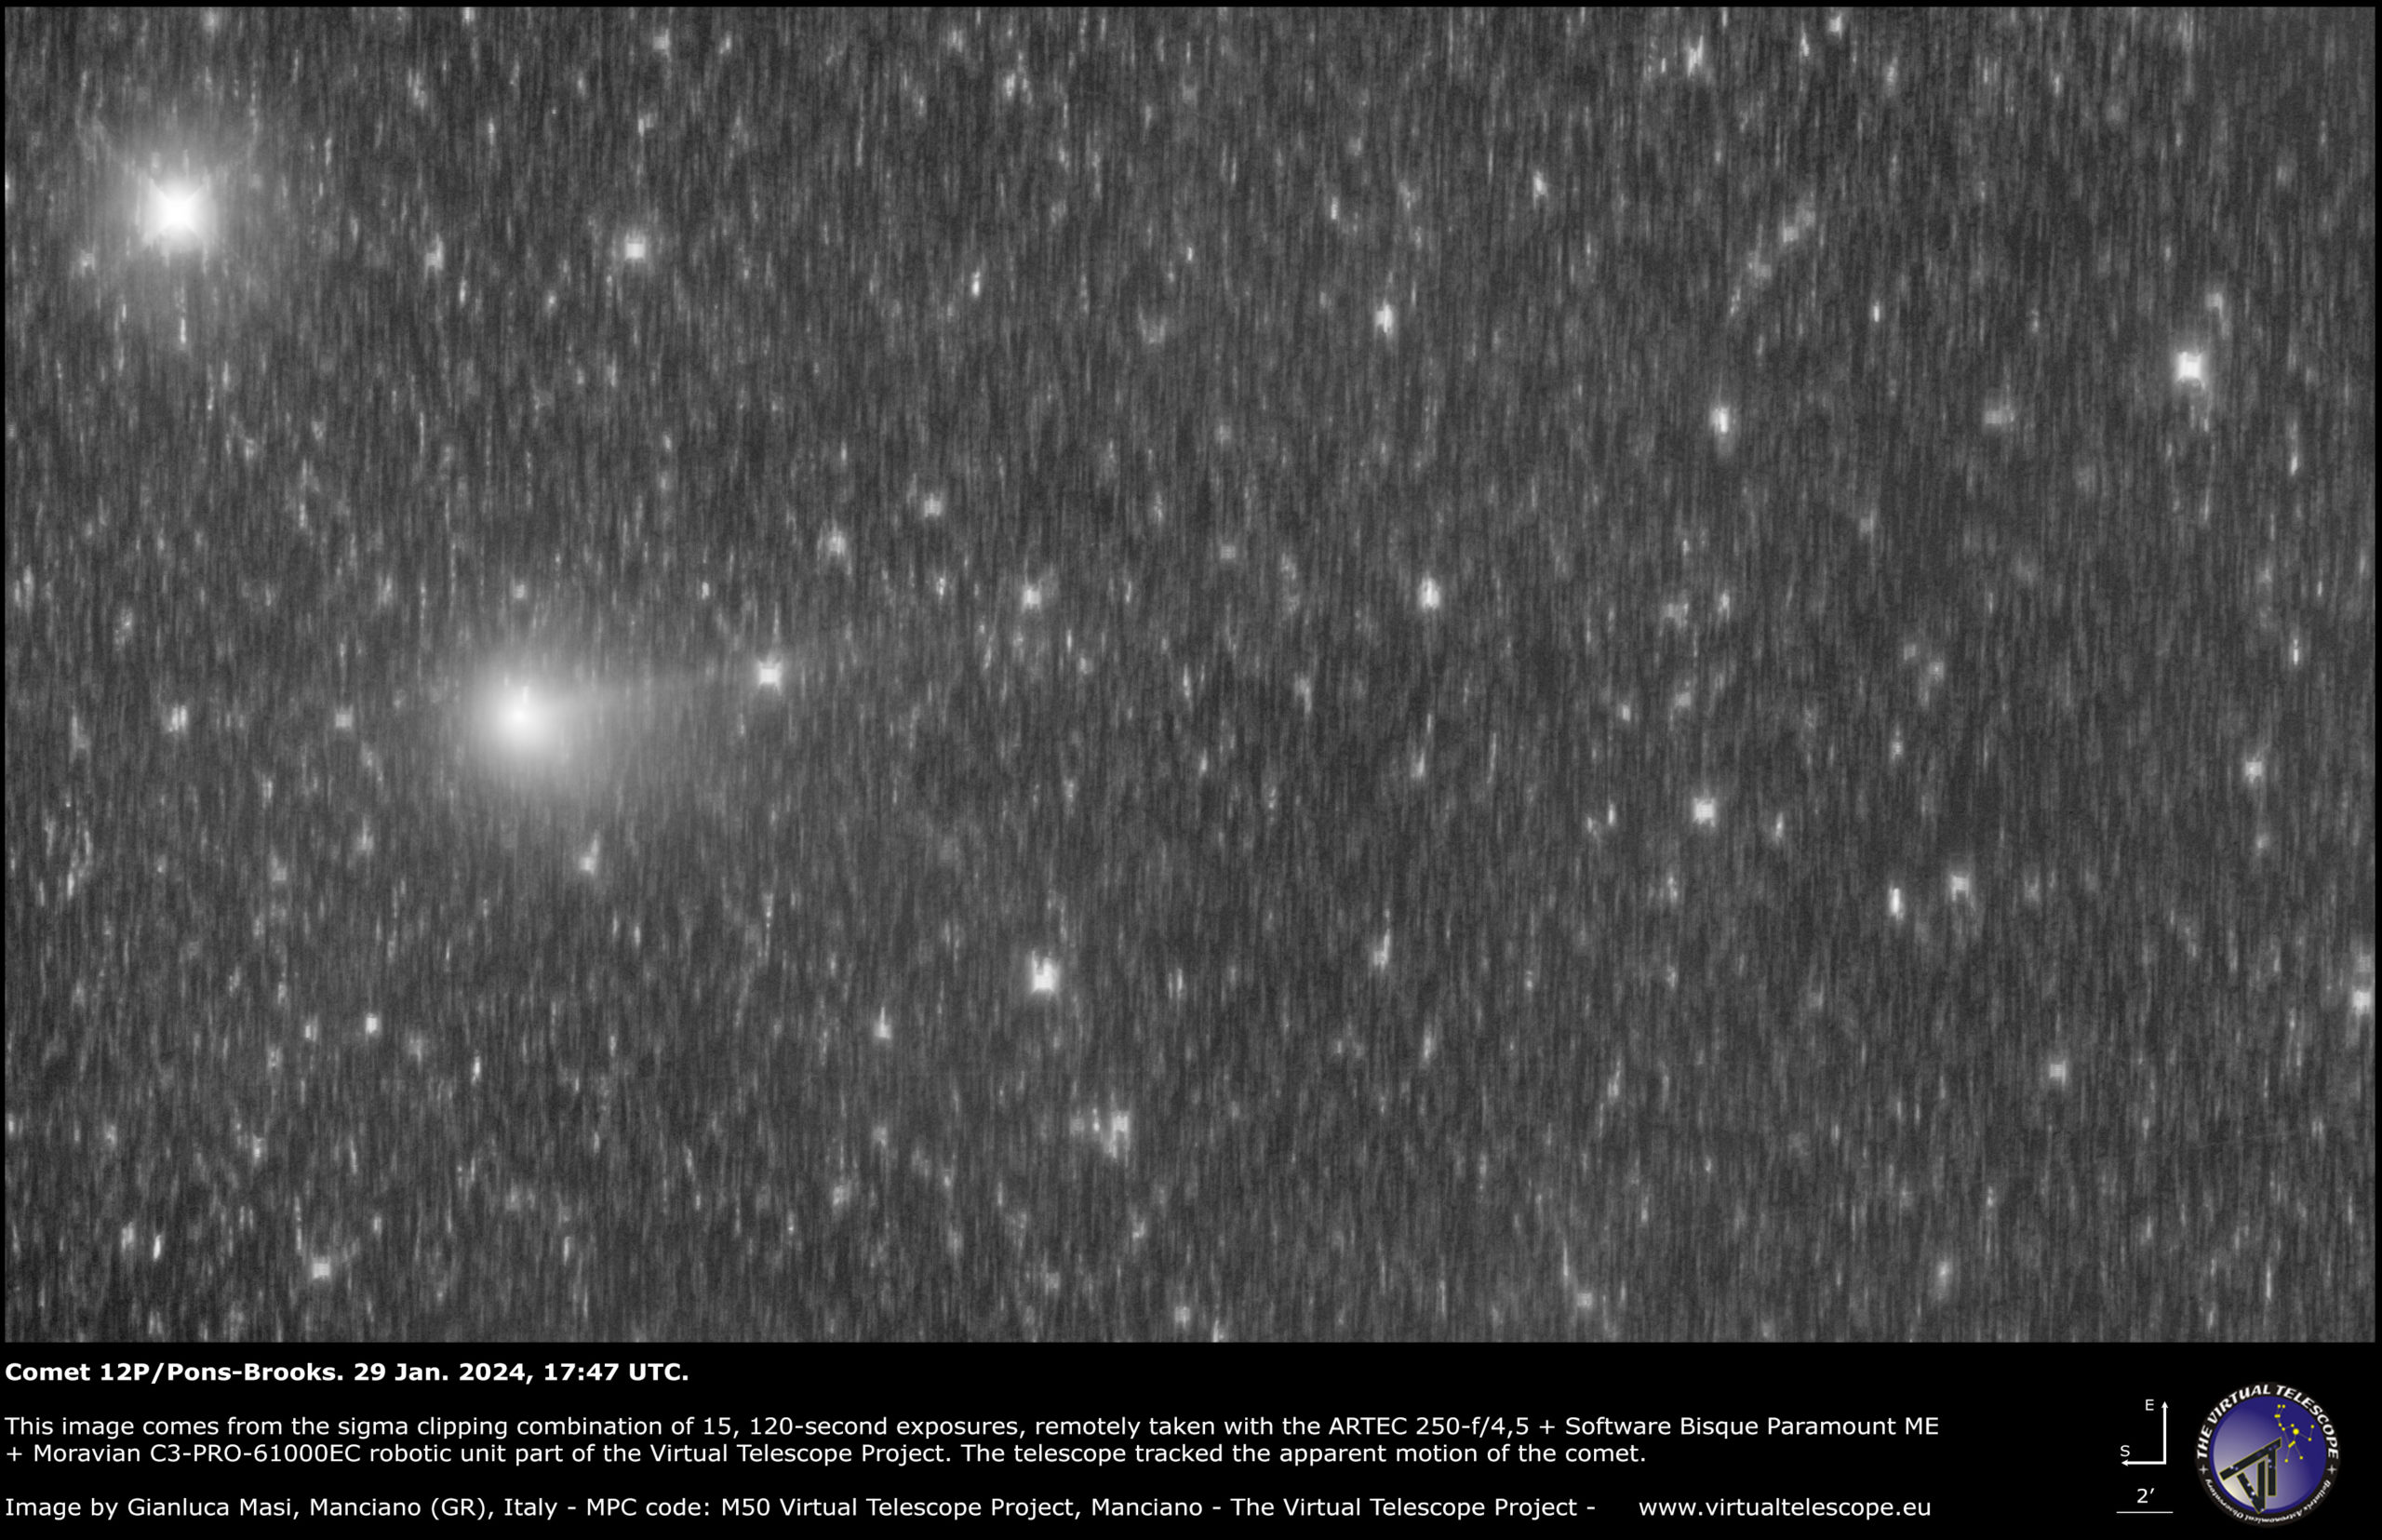 Comet 12P/Pons-Brooks, a larger view: 29 Jan. 2024.